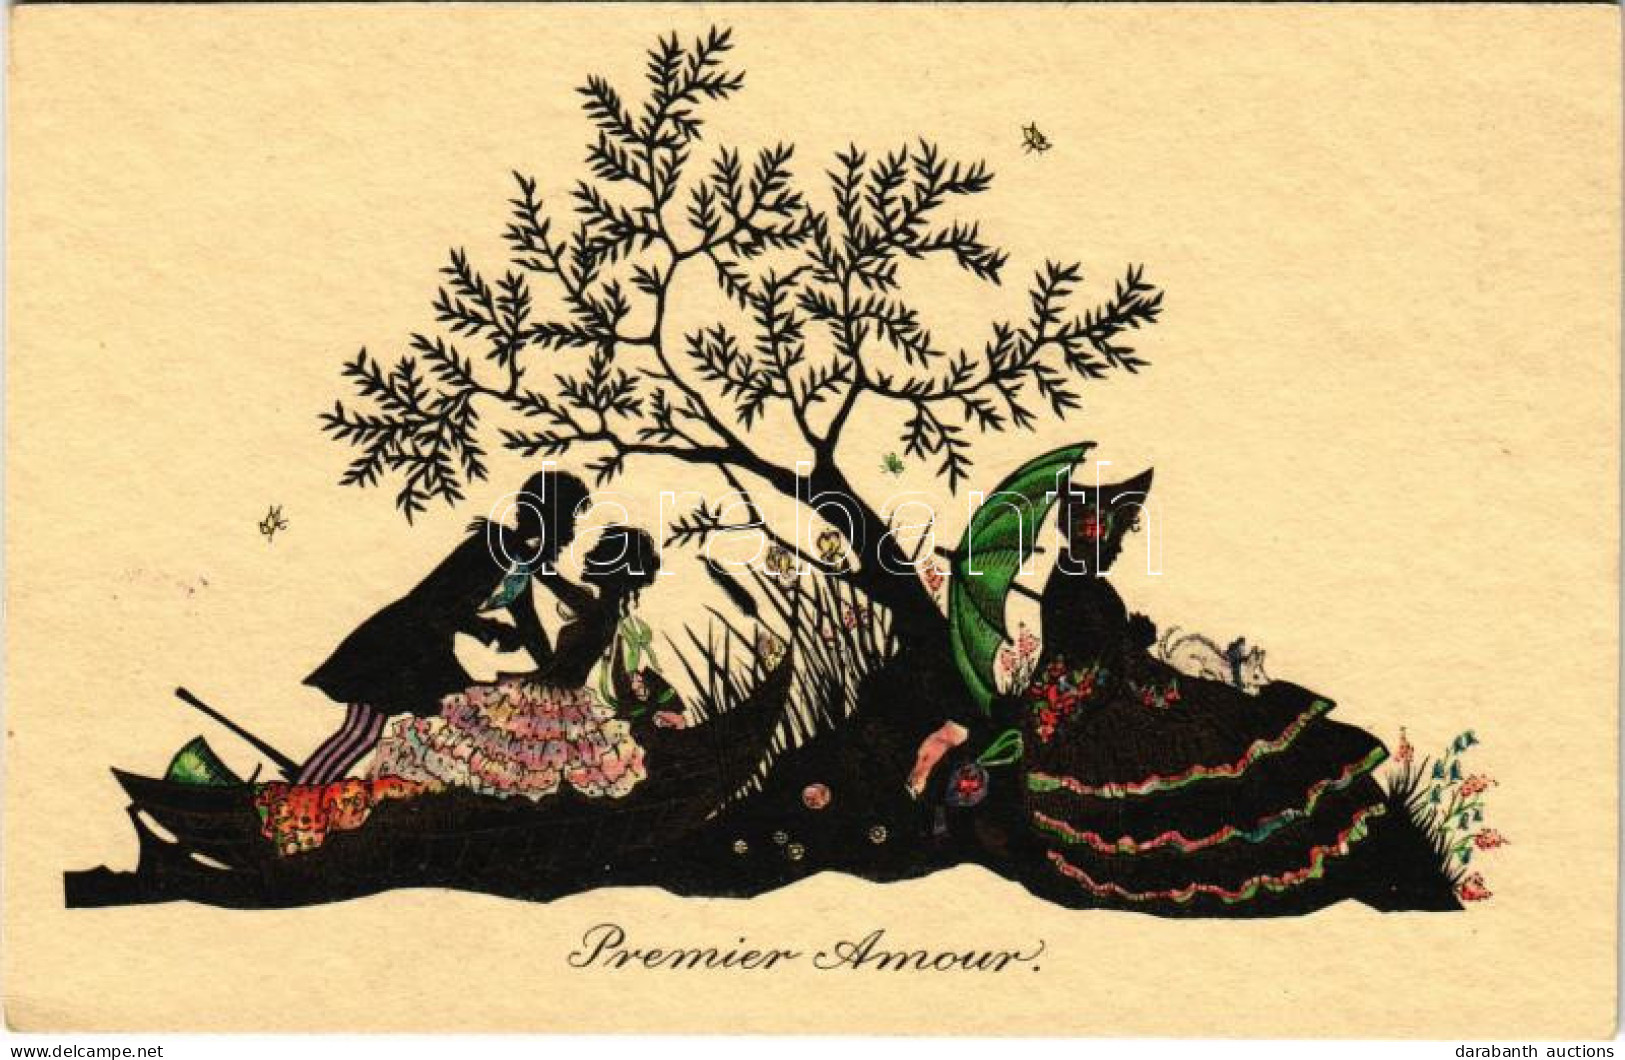 ** T2 Premier Amour / Romantic Silhouette Art Postcard With Couple, First Love. Primus W.L.B. No. 2103. - Unclassified